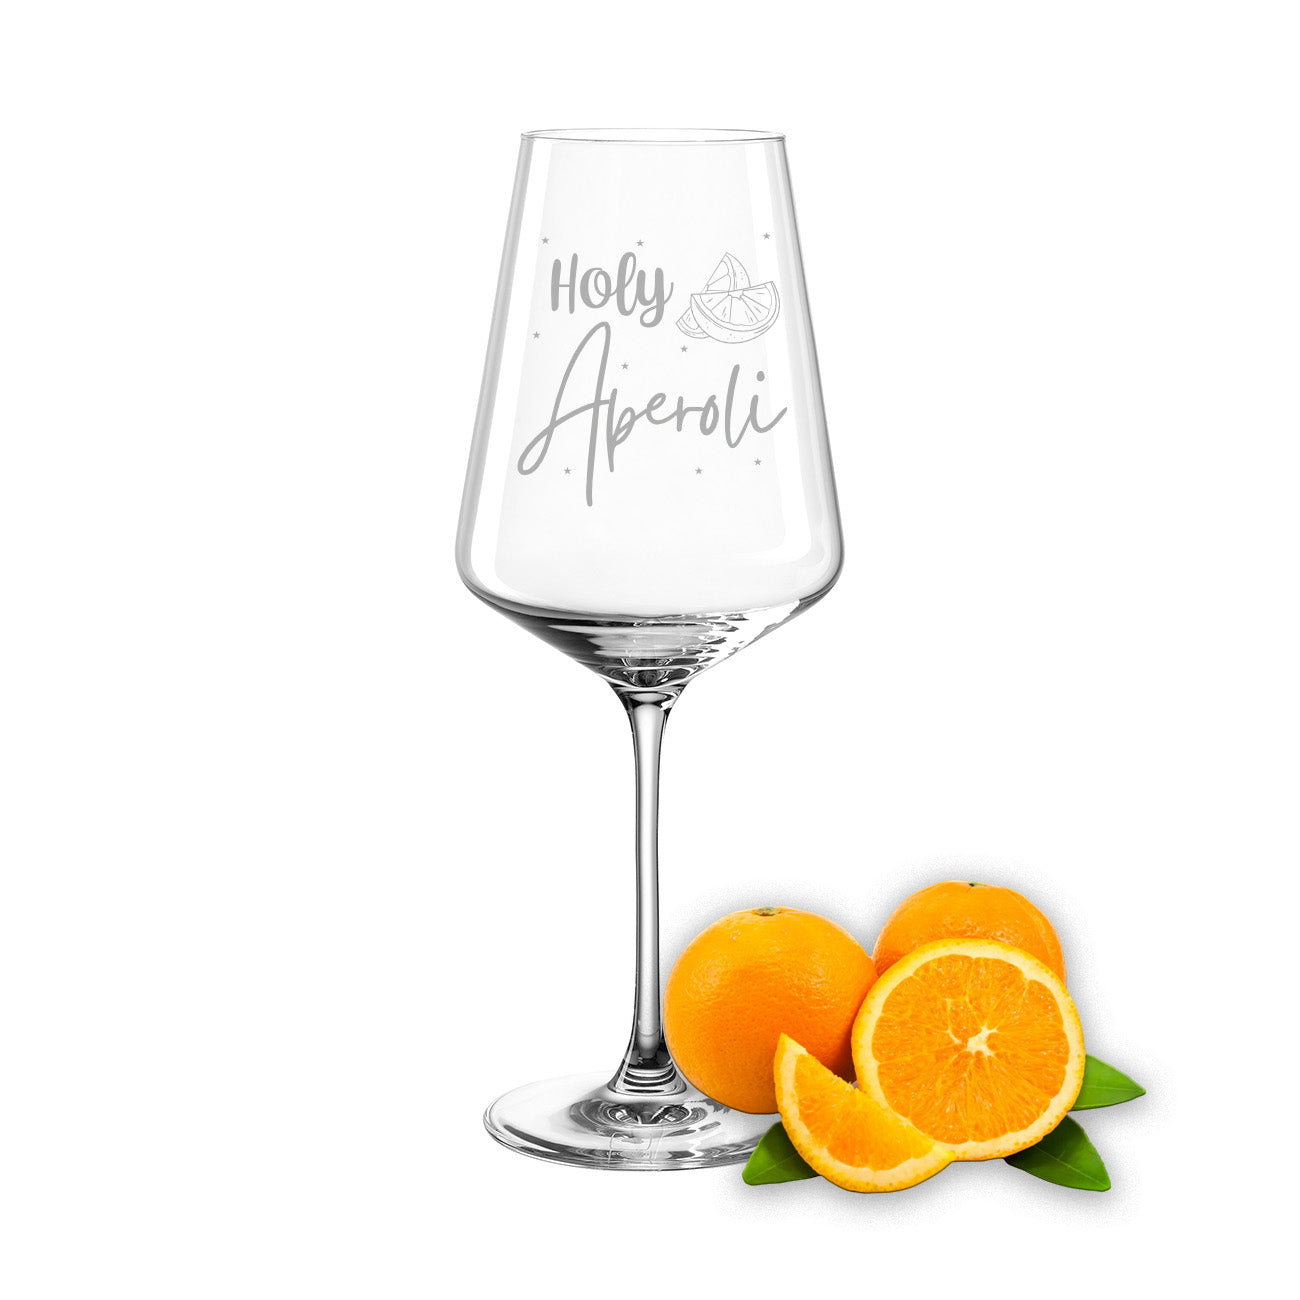 Weinglas mit Gravur Leonardo Puccini "HOLY APEROLI"